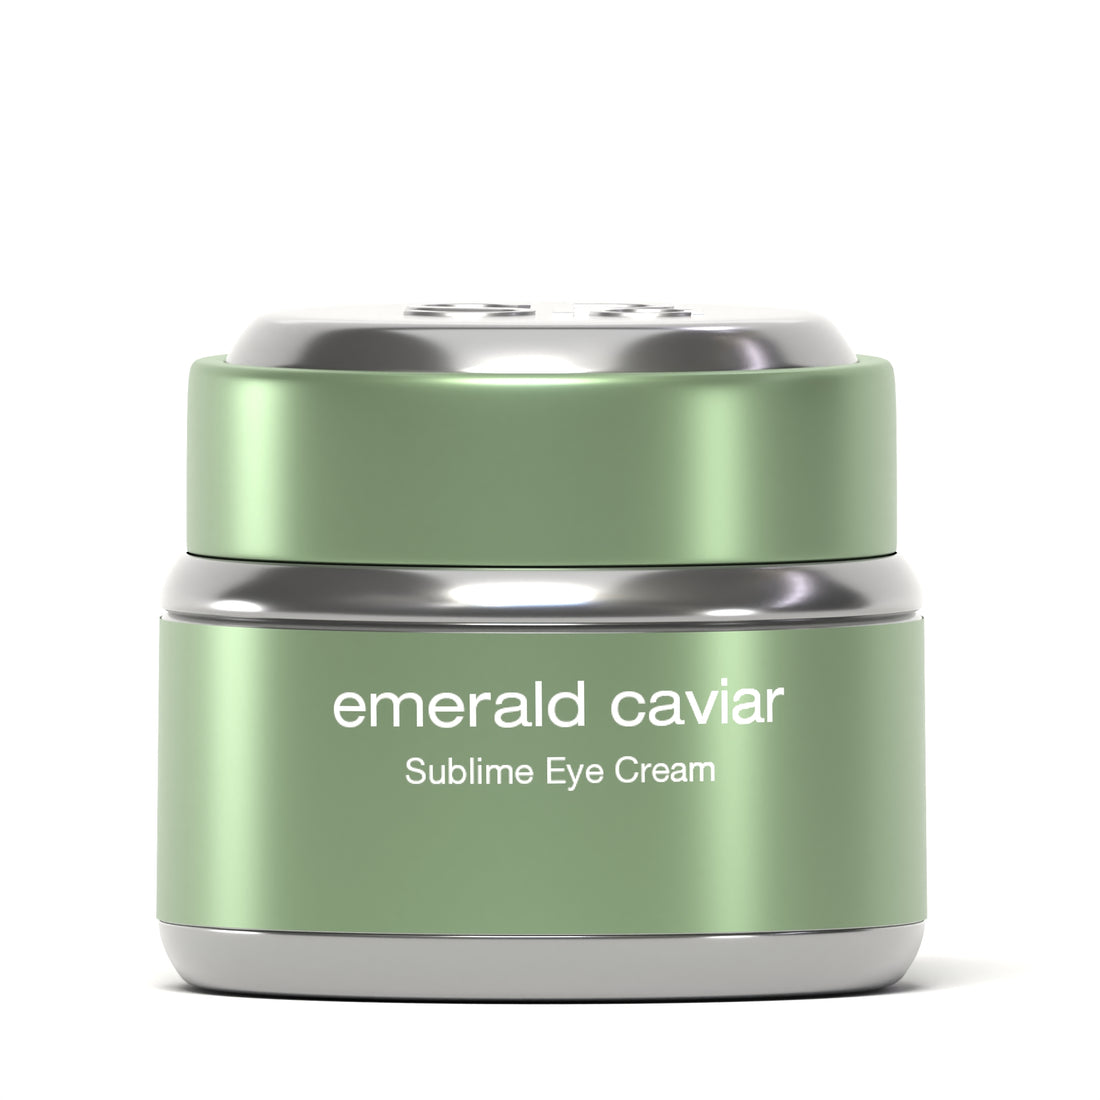 emerald caviar Sublime Eye Cream